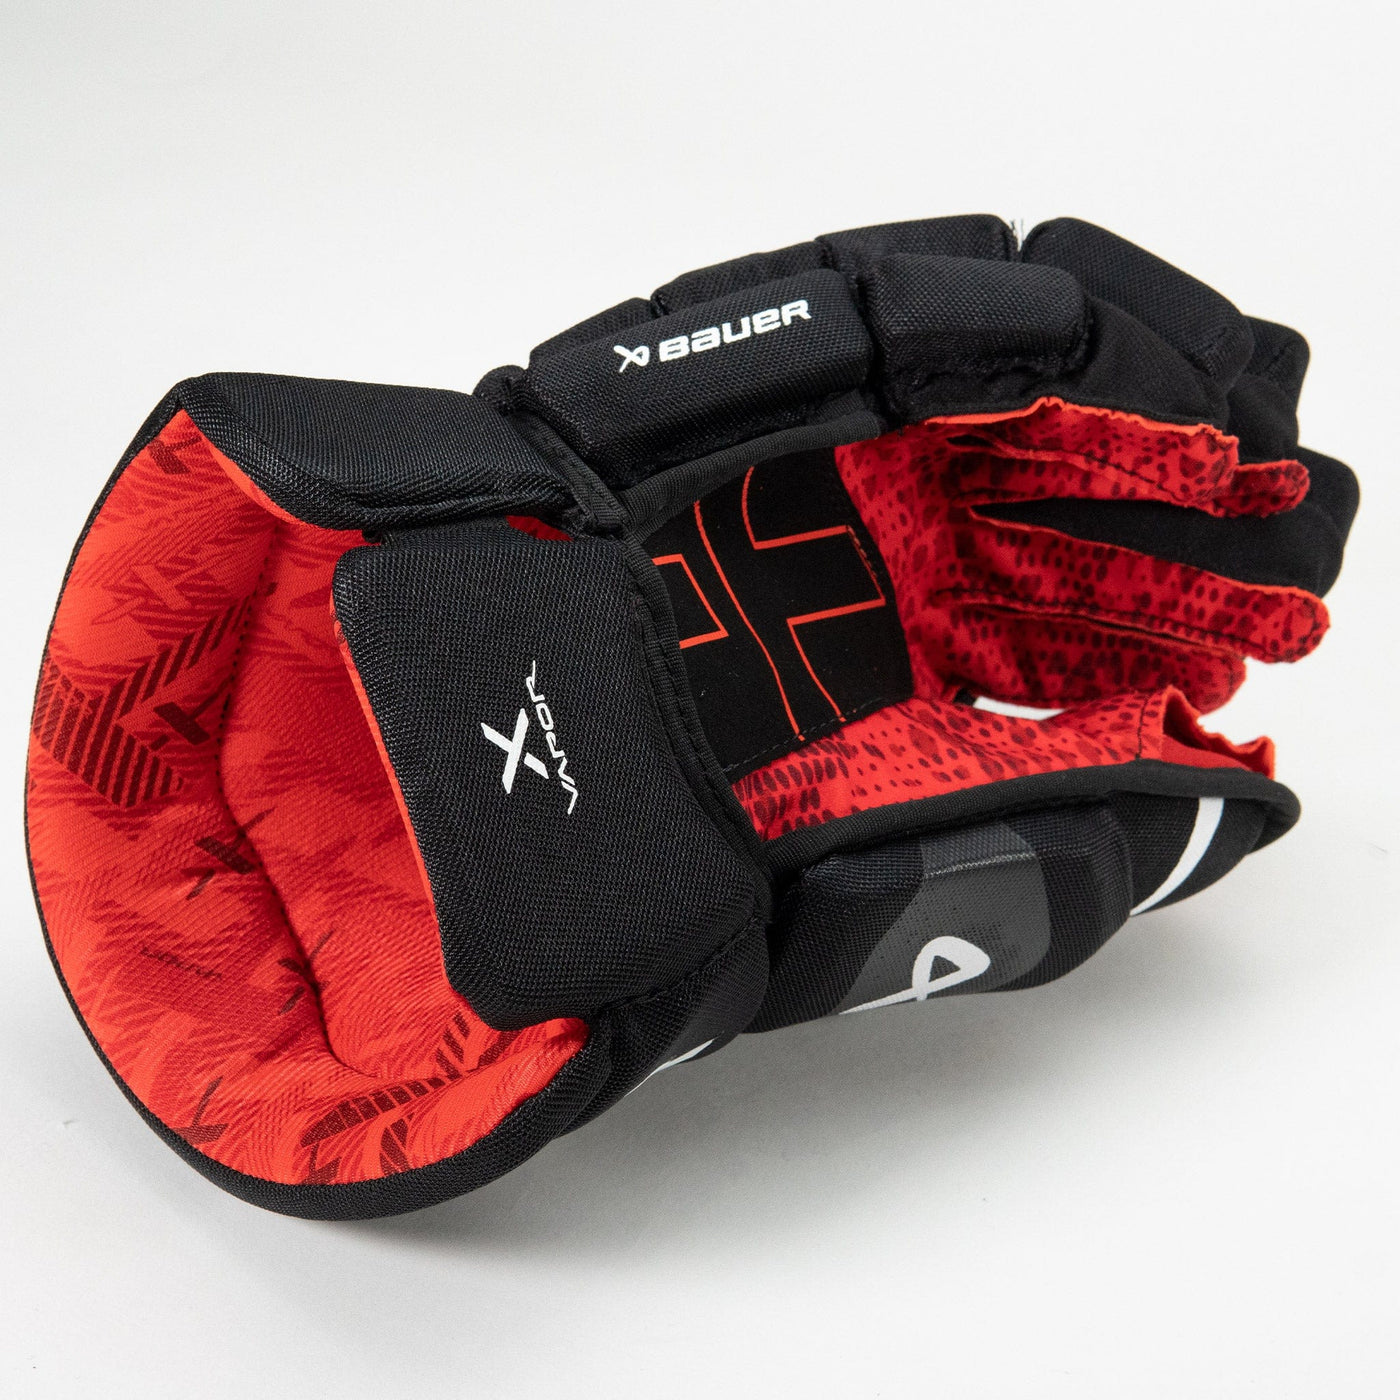 Bauer Vapor Velocity Intermediate Hockey Gloves - The Hockey Shop Source For Sports